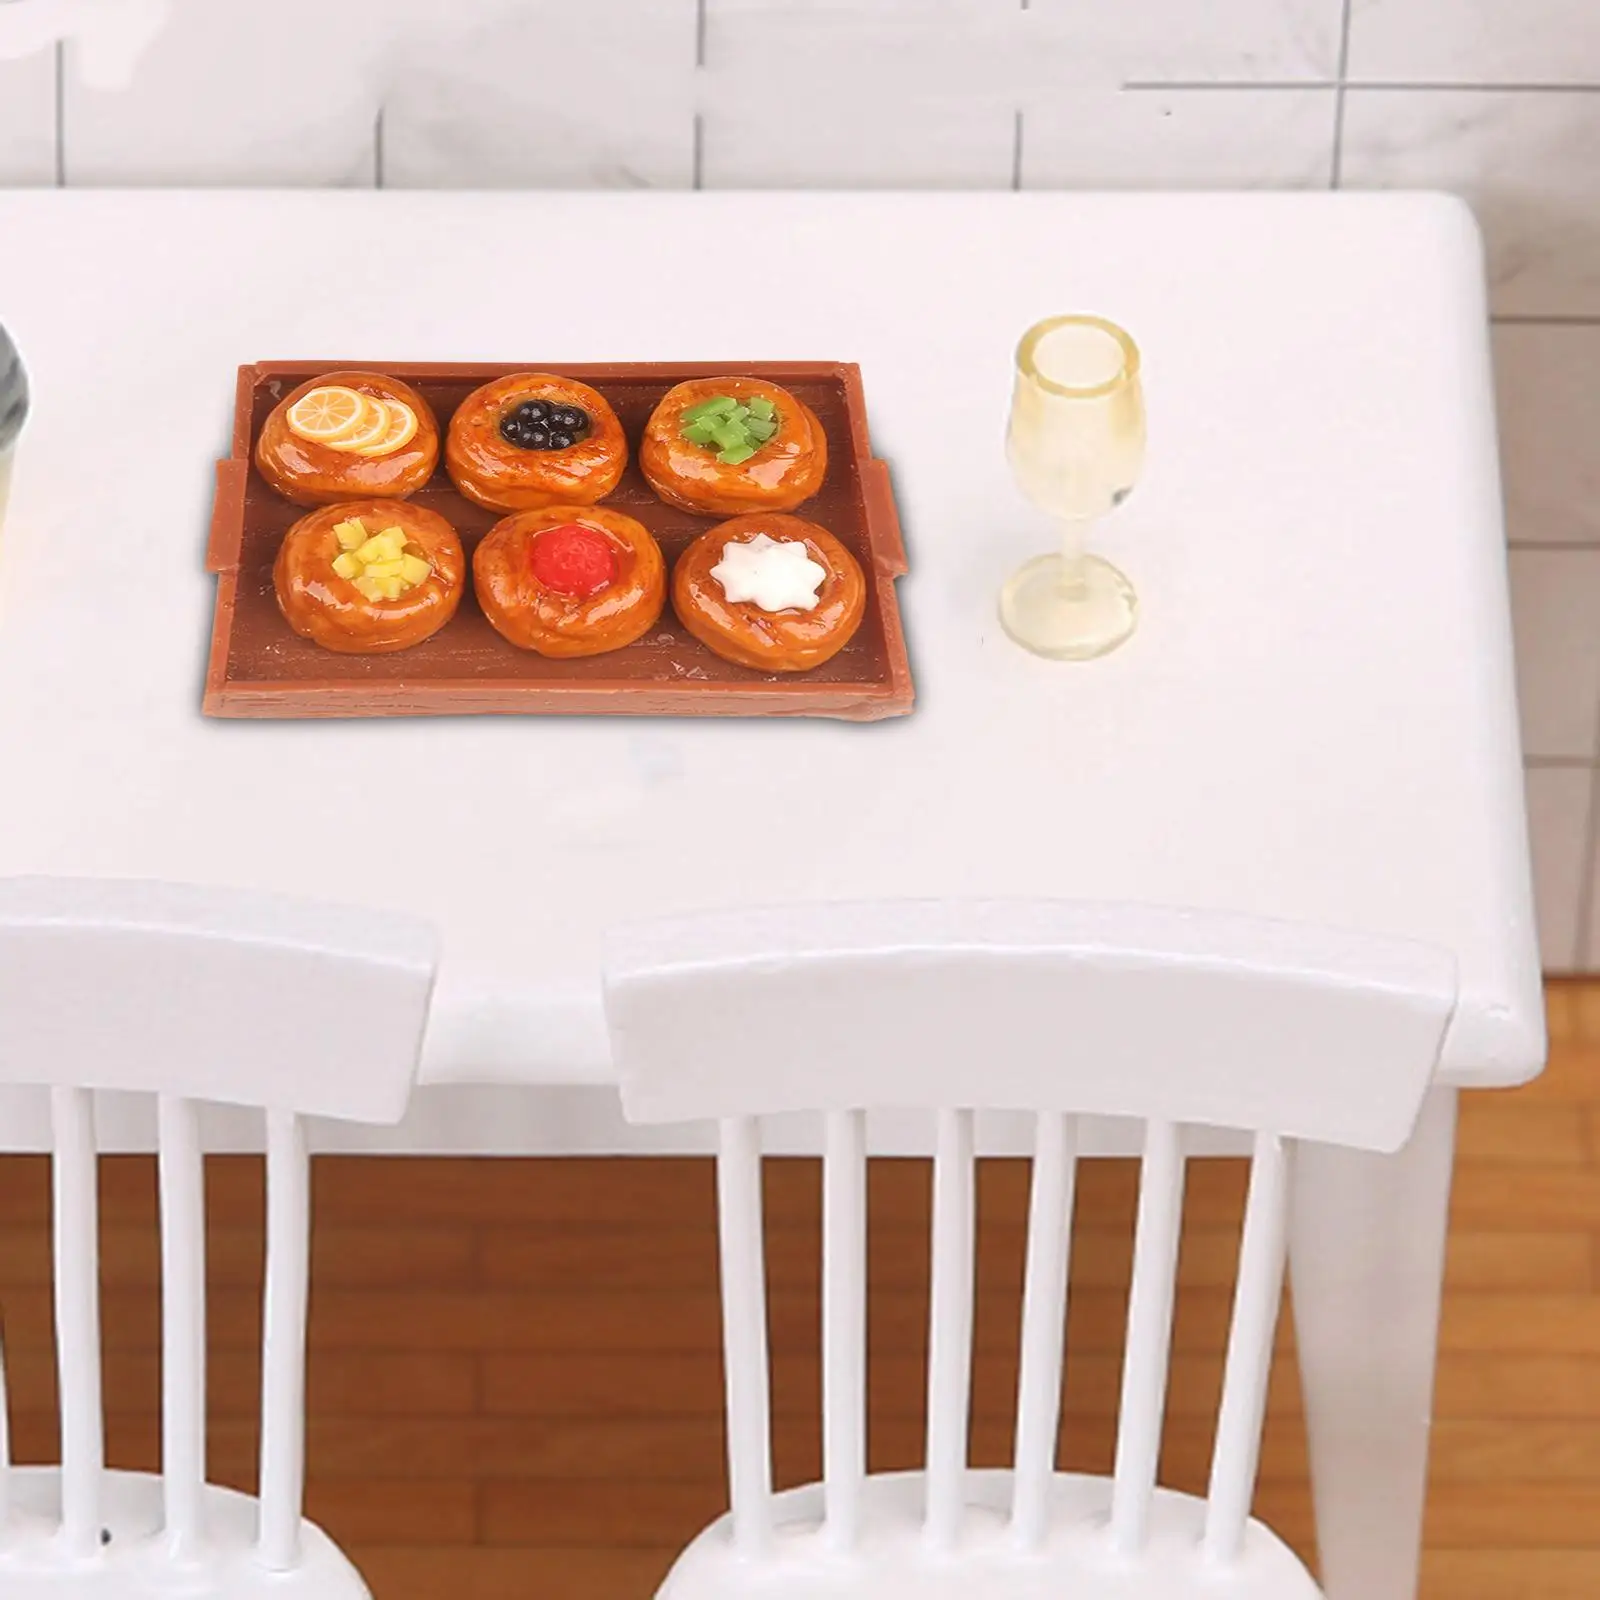 1/12 Dollhouse Miniature Bread Simulation for Dining Room Restaurant Desktop